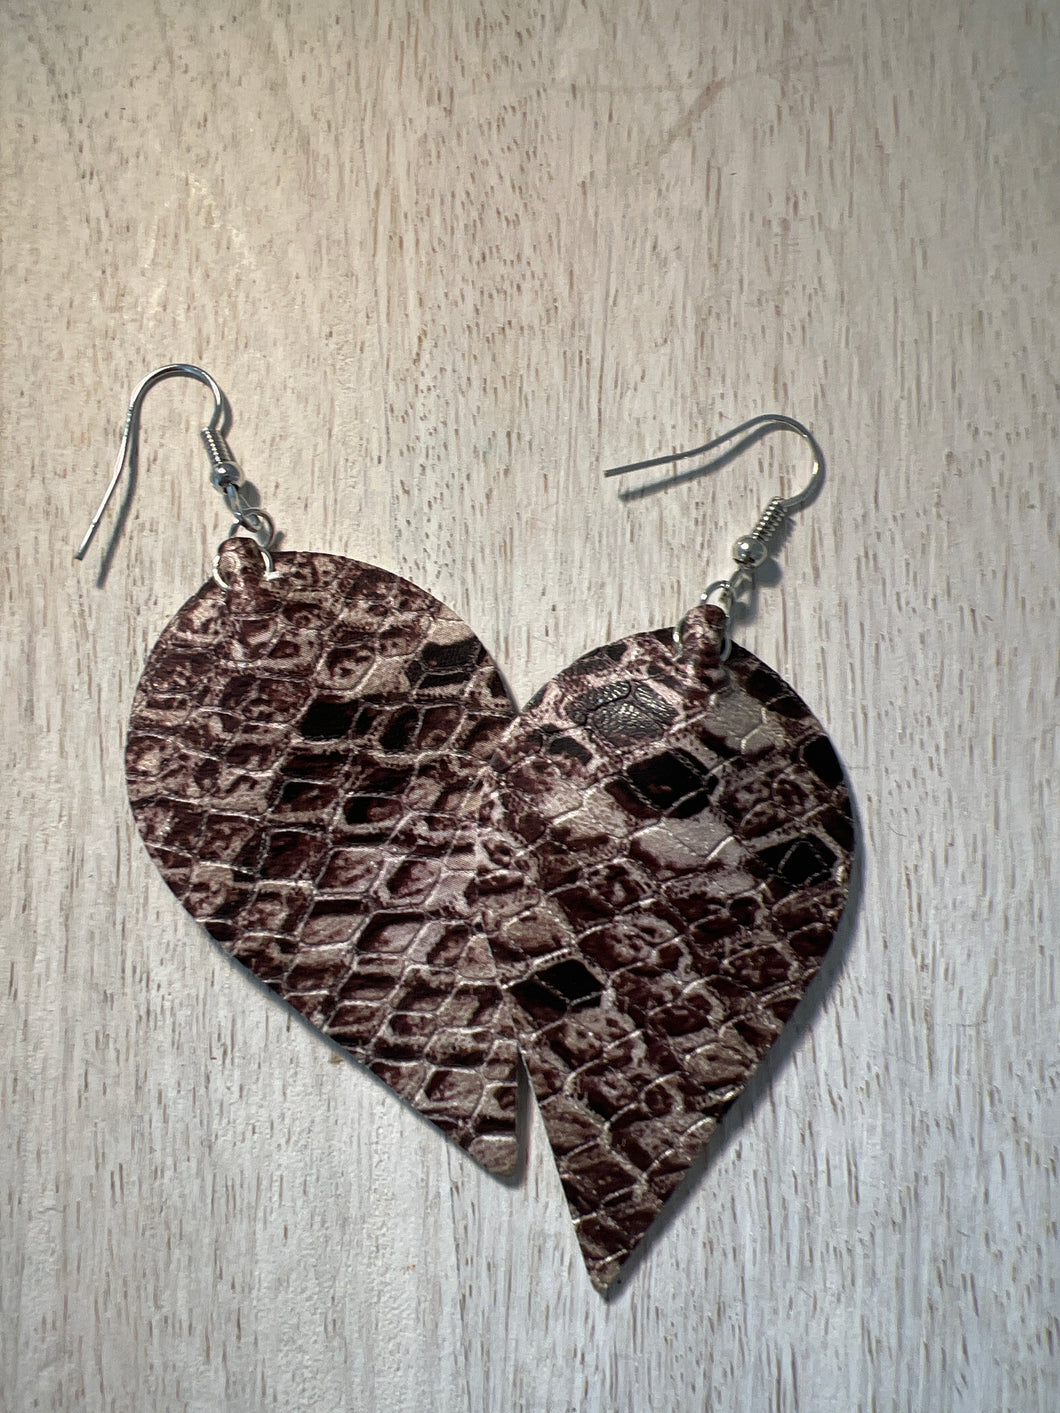 Snakeskin Print Earrings - Mocha Brown